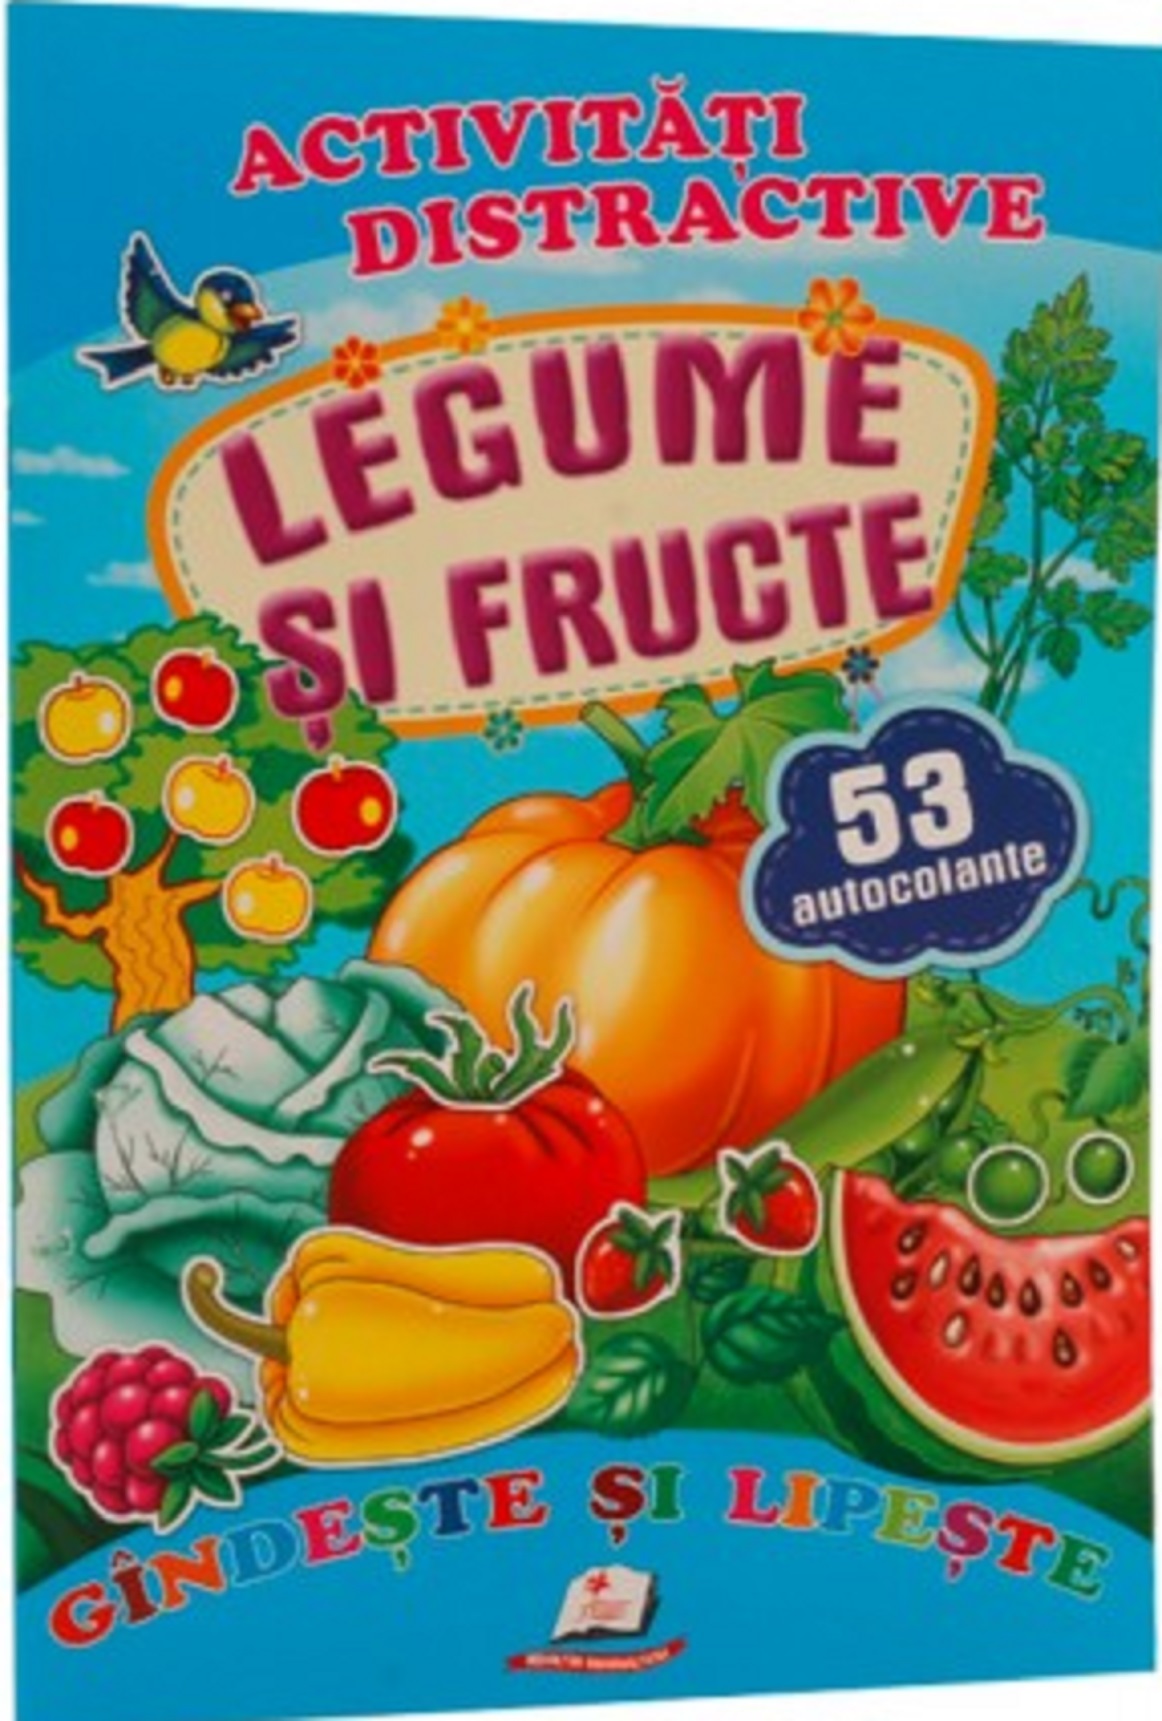 Legume si fructe + 53 autocolante